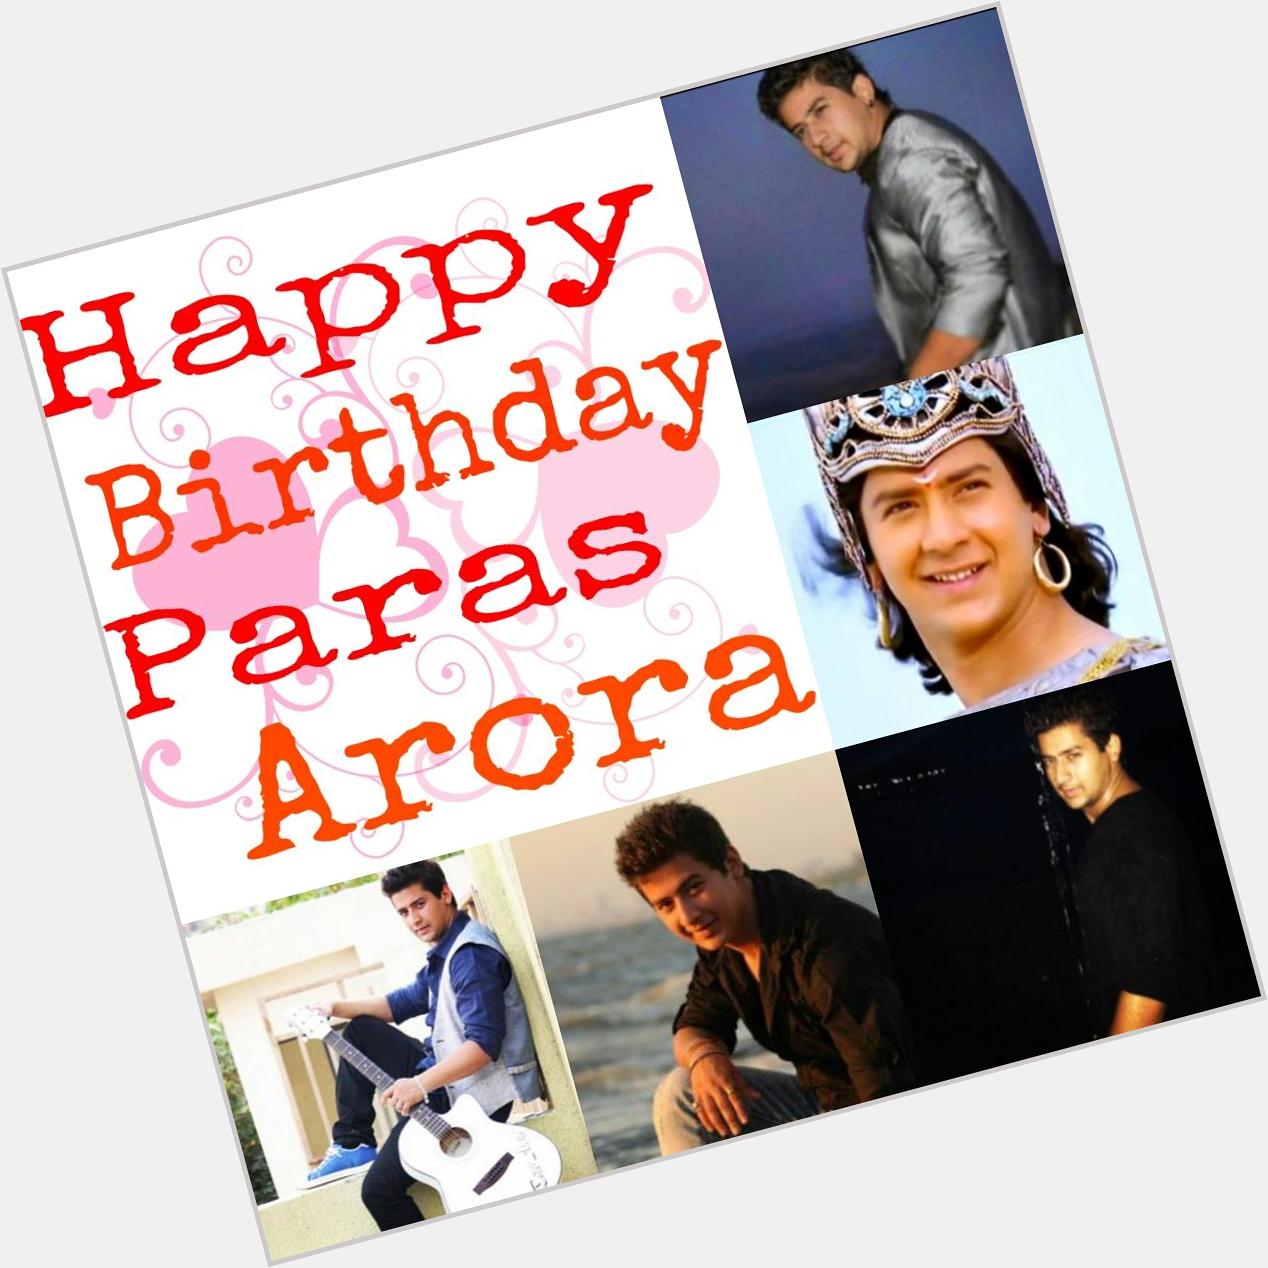  Happy Birthday Paras Arora ...
I love you paras arora... 